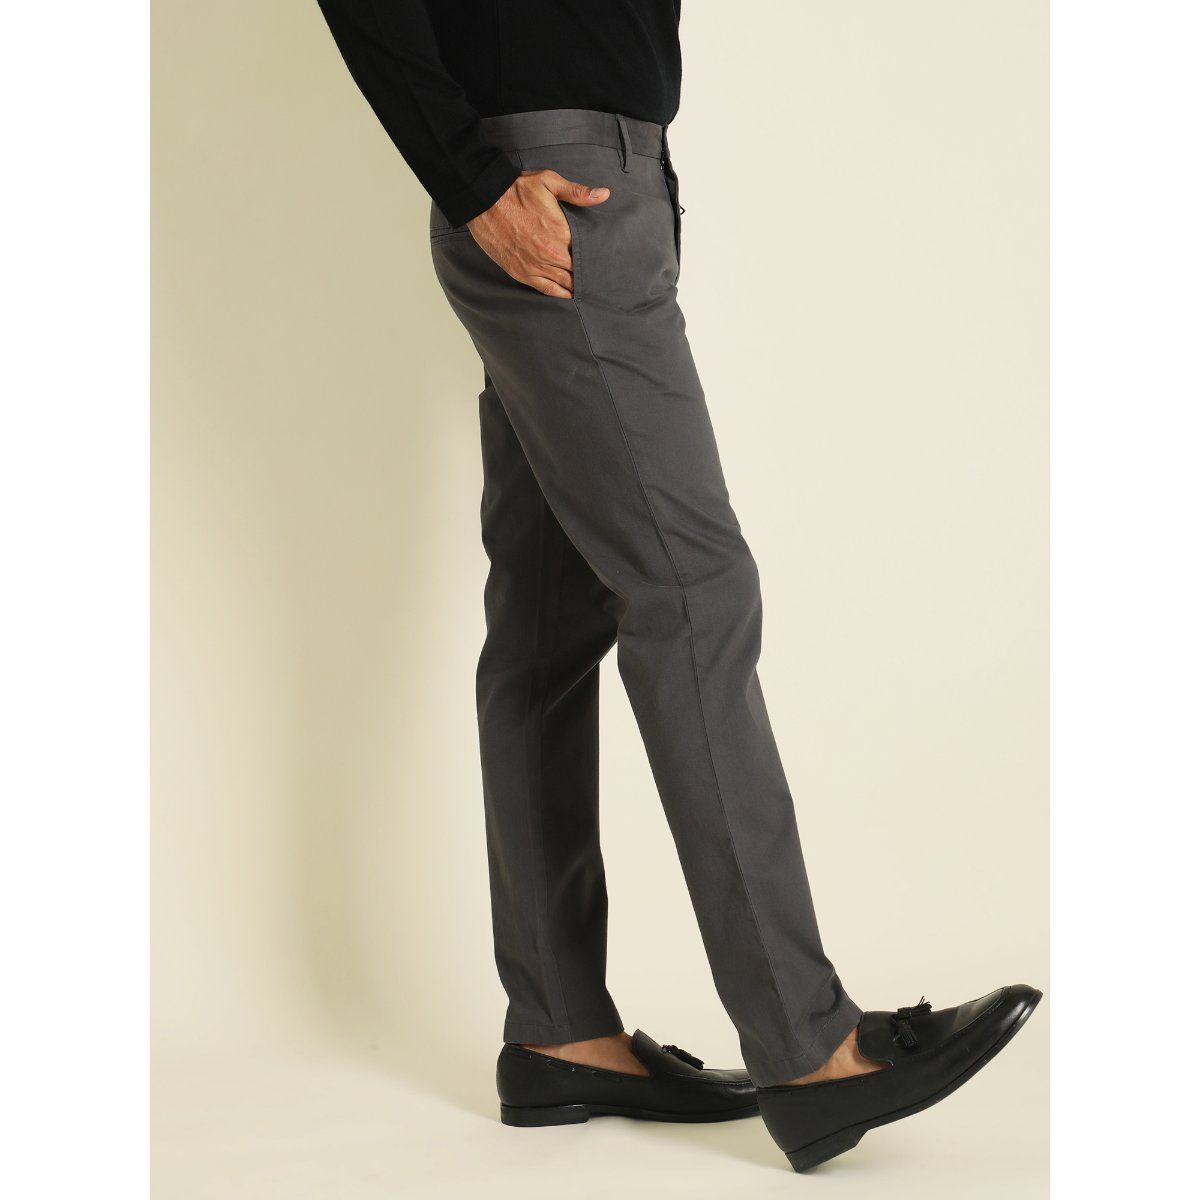 Bell Bottom Pants (No Kick Pleat) — B&K Enterprises Costume Company | Bell  bottom pants, Elvis jumpsuits, Bell bottoms